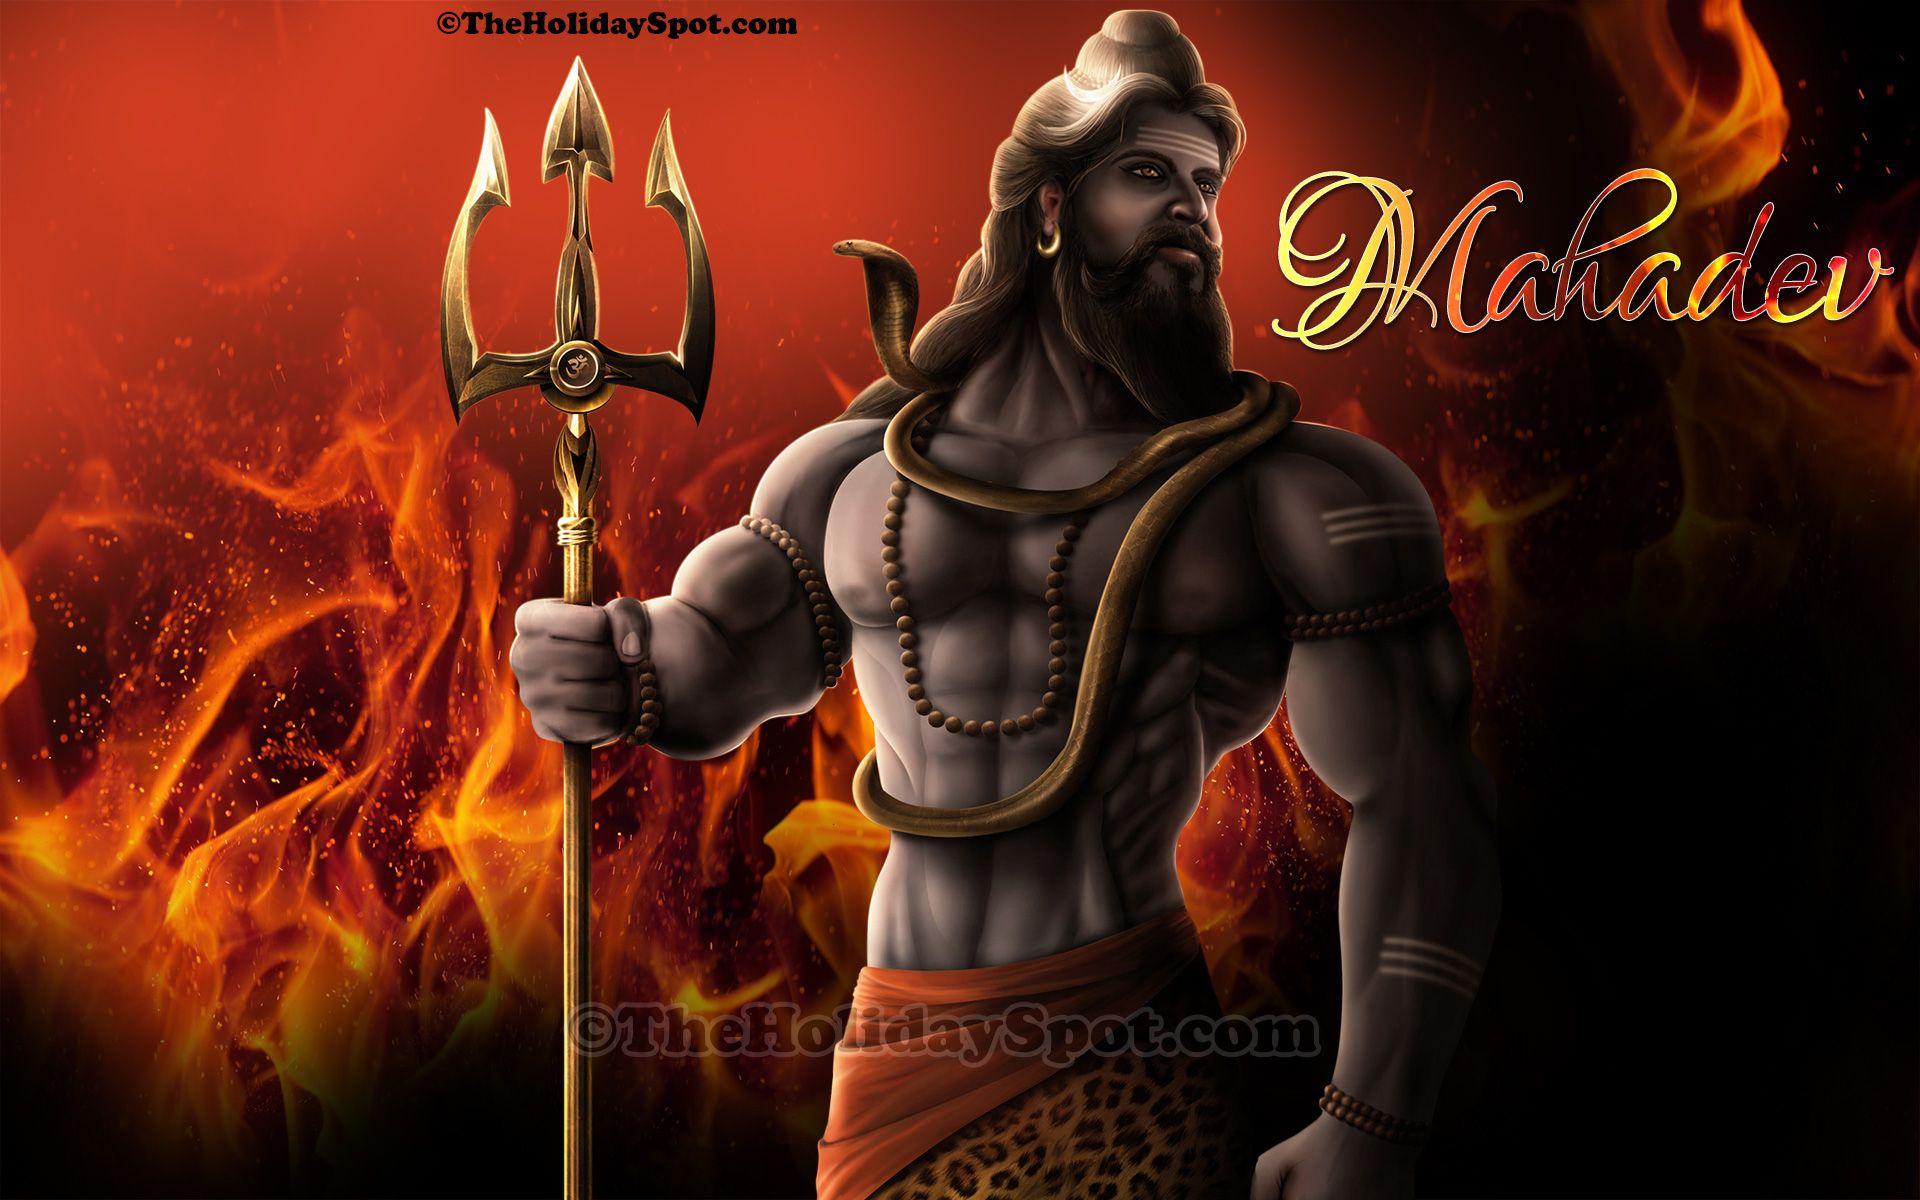 Hanuman Magical Live wallpaper Android के लिए APK डाउनलोड करें